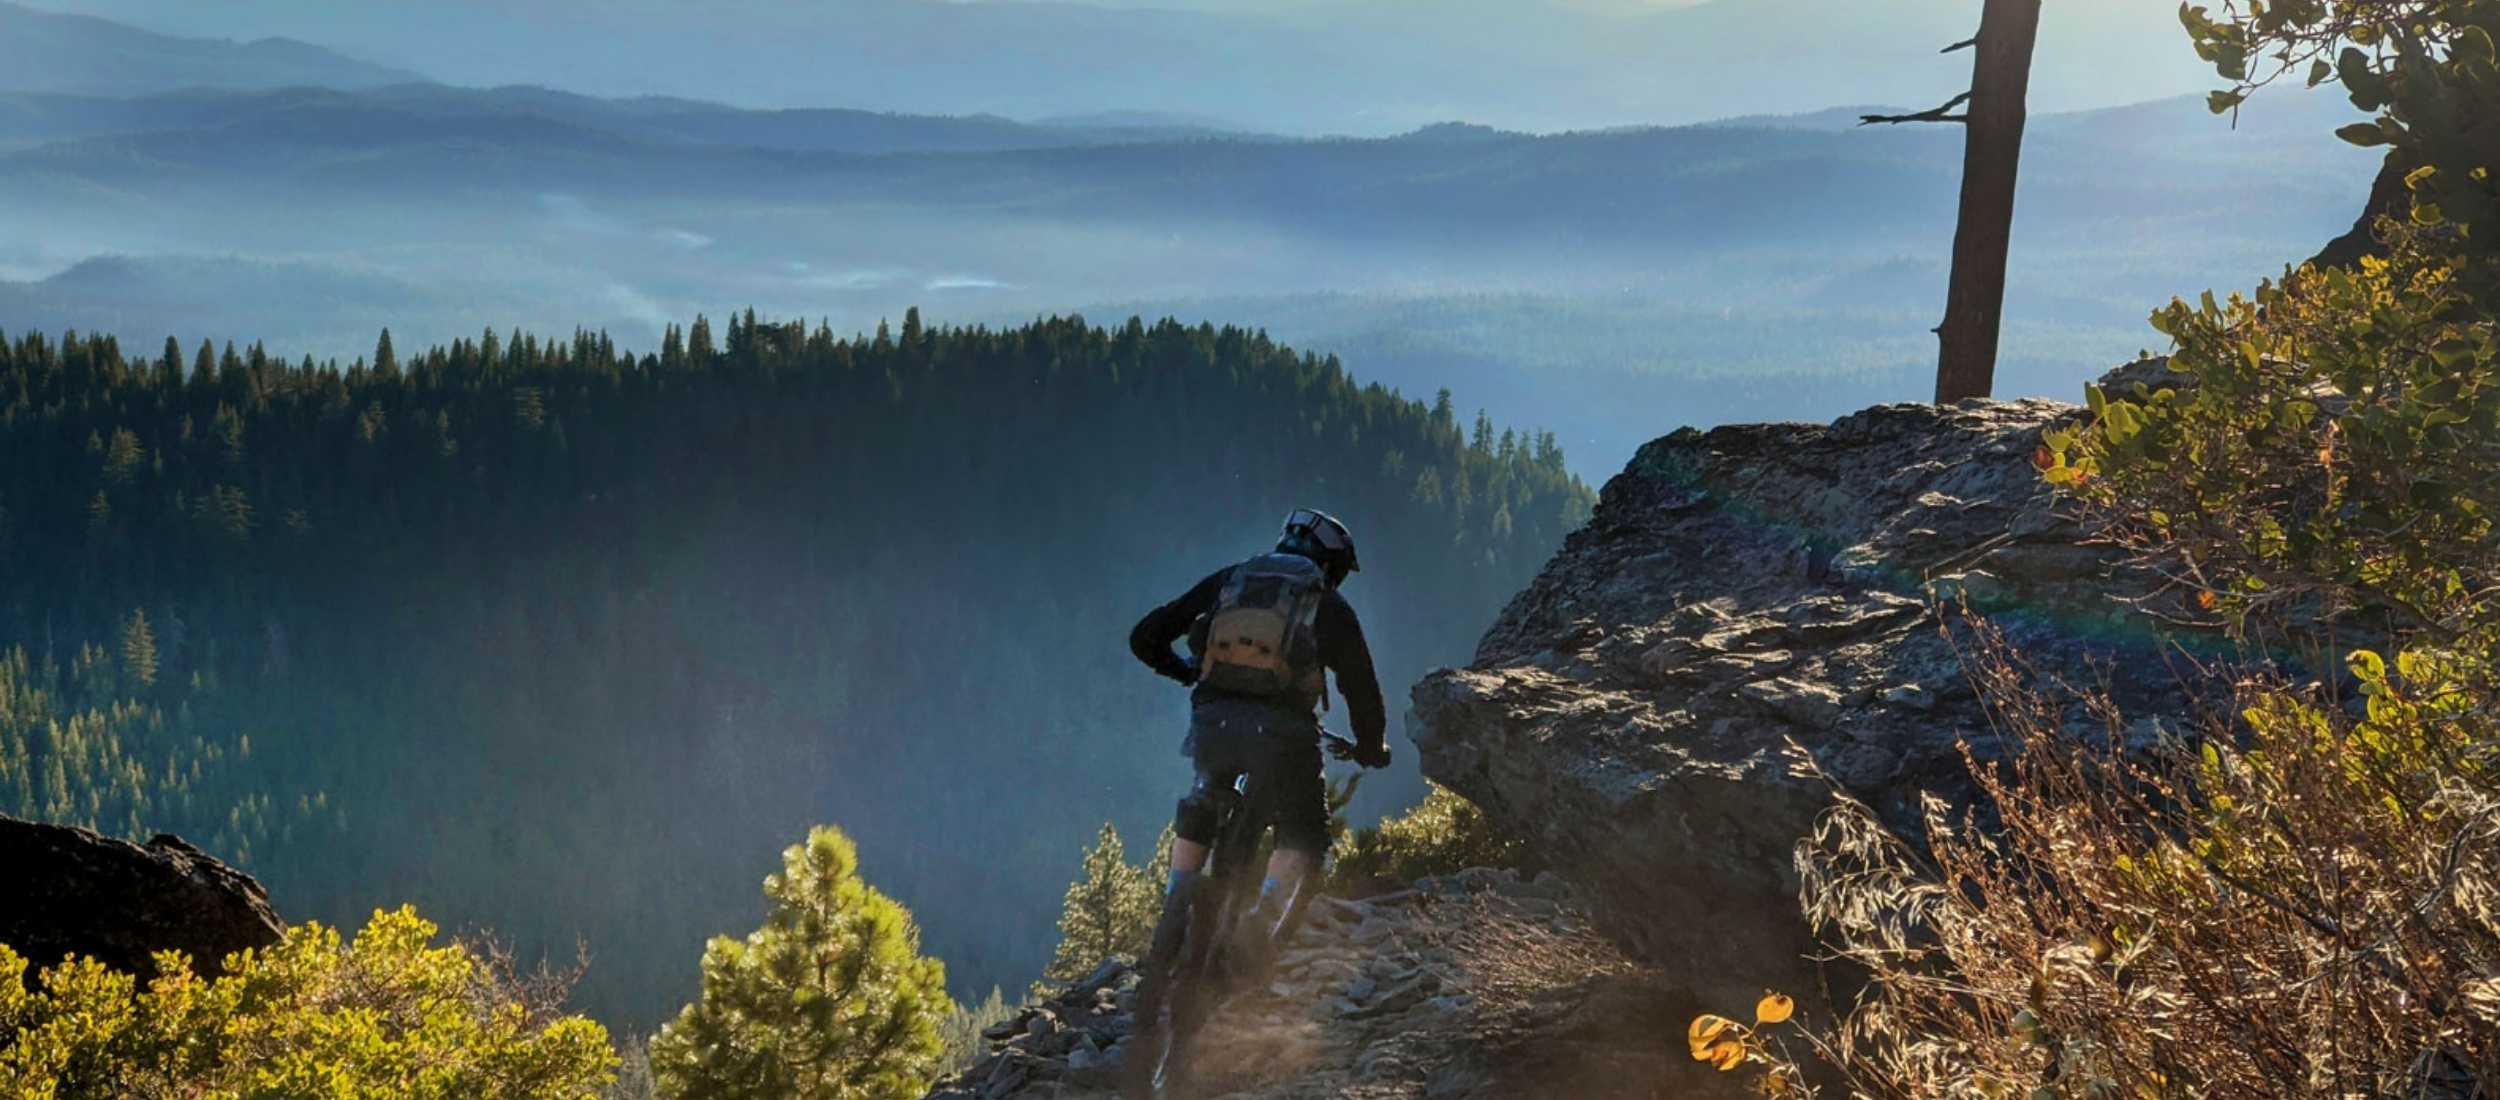 Mountain biking on Mount Hough in Northern California